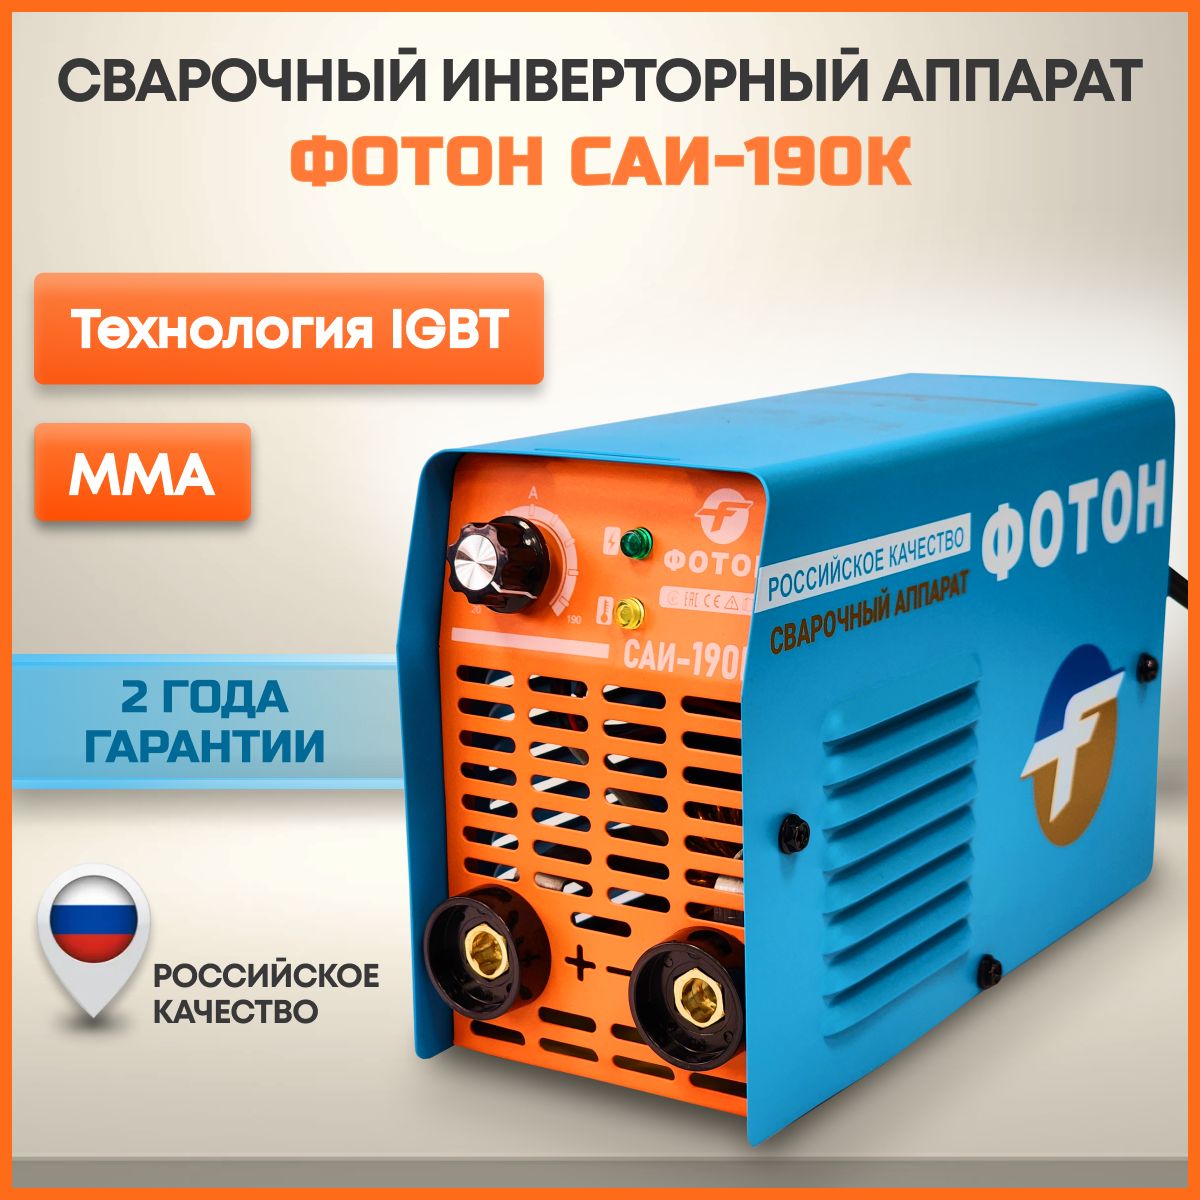 СварочныйинверторныйаппаратФОТОНСАИ-190К